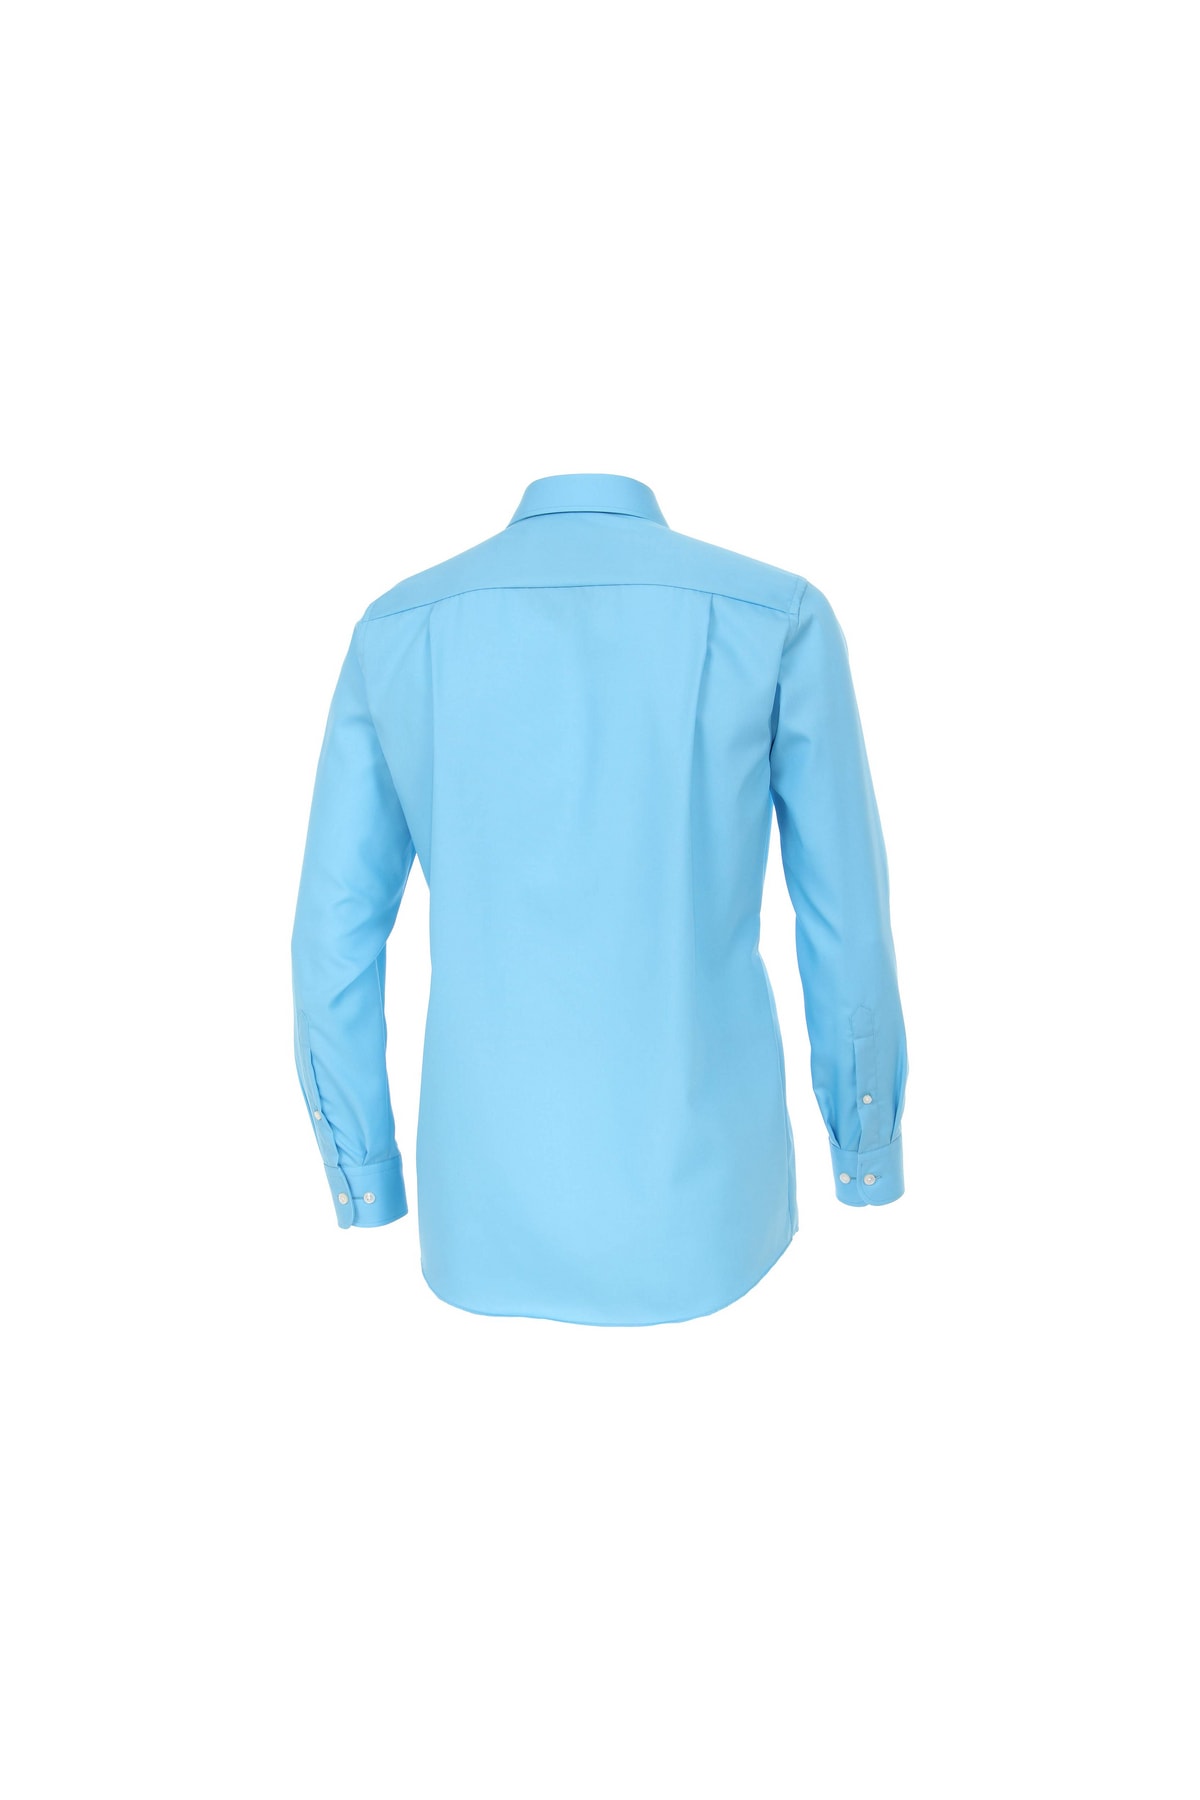 VENTI Hemd Blau Regular Fit Fast ausverkauft